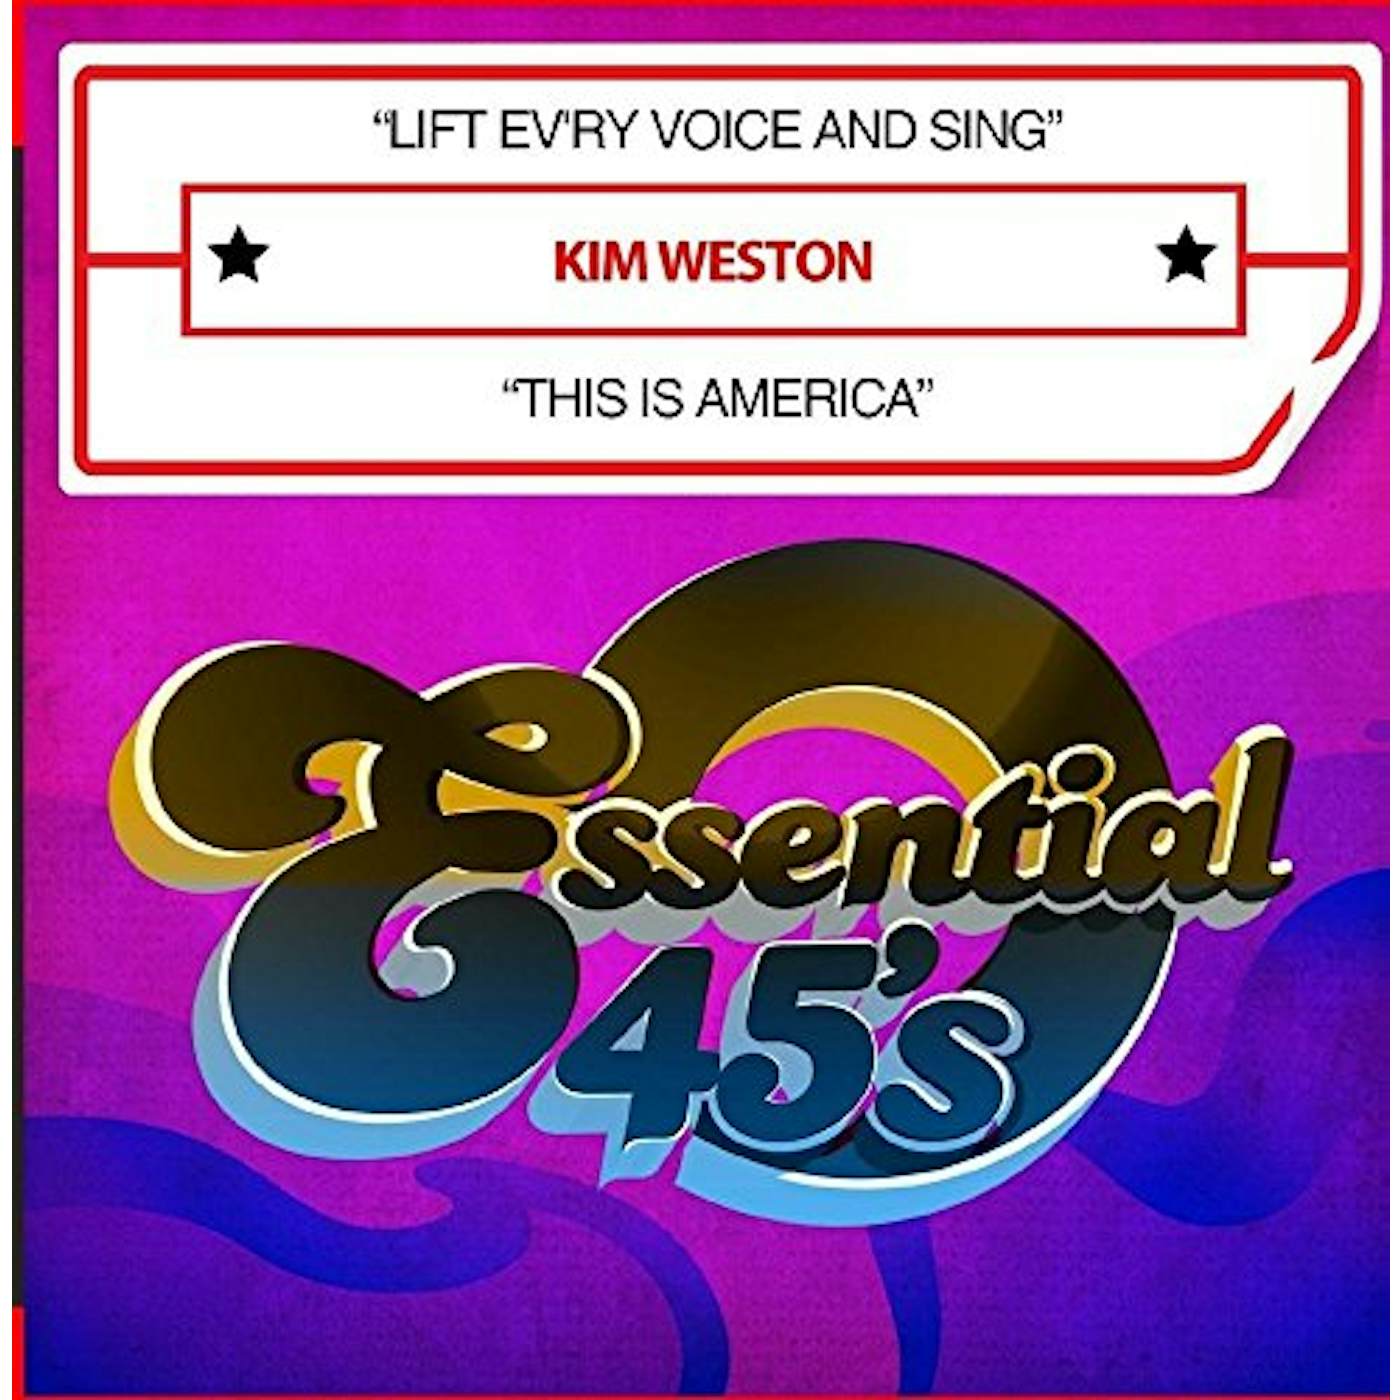 Kim Weston LIFT EV'RY VOICE AND SING / THIS IS AMERICA CD